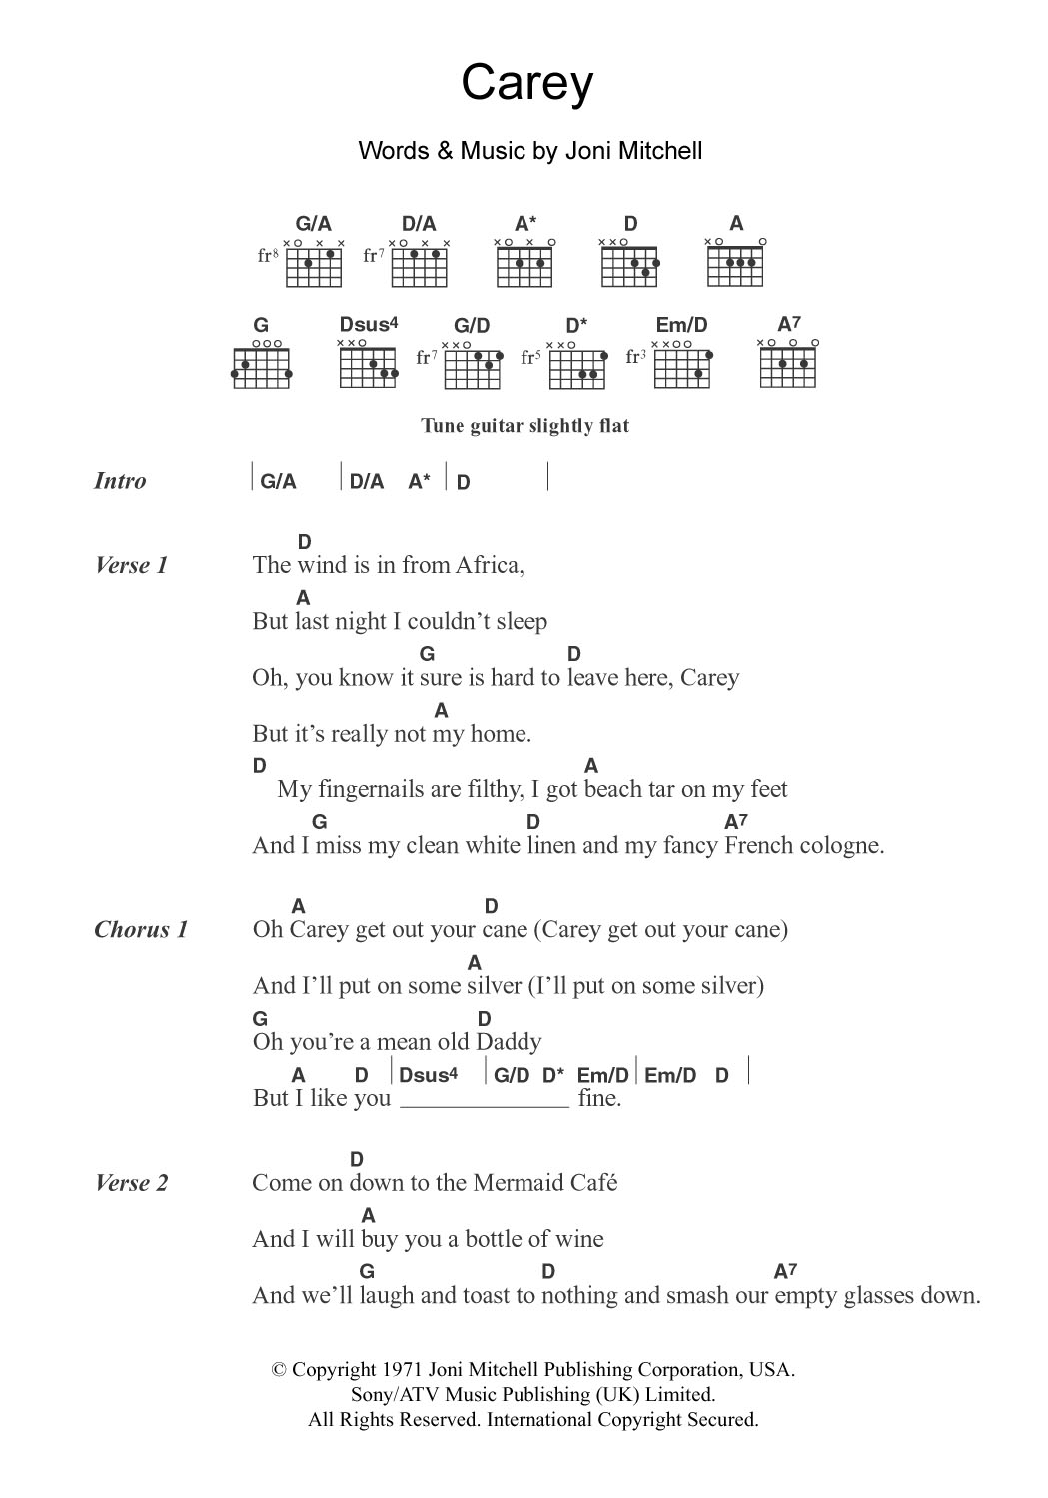 Joni Mitchell Carey Sheet Music Notes & Chords for Lyrics & Chords - Download or Print PDF